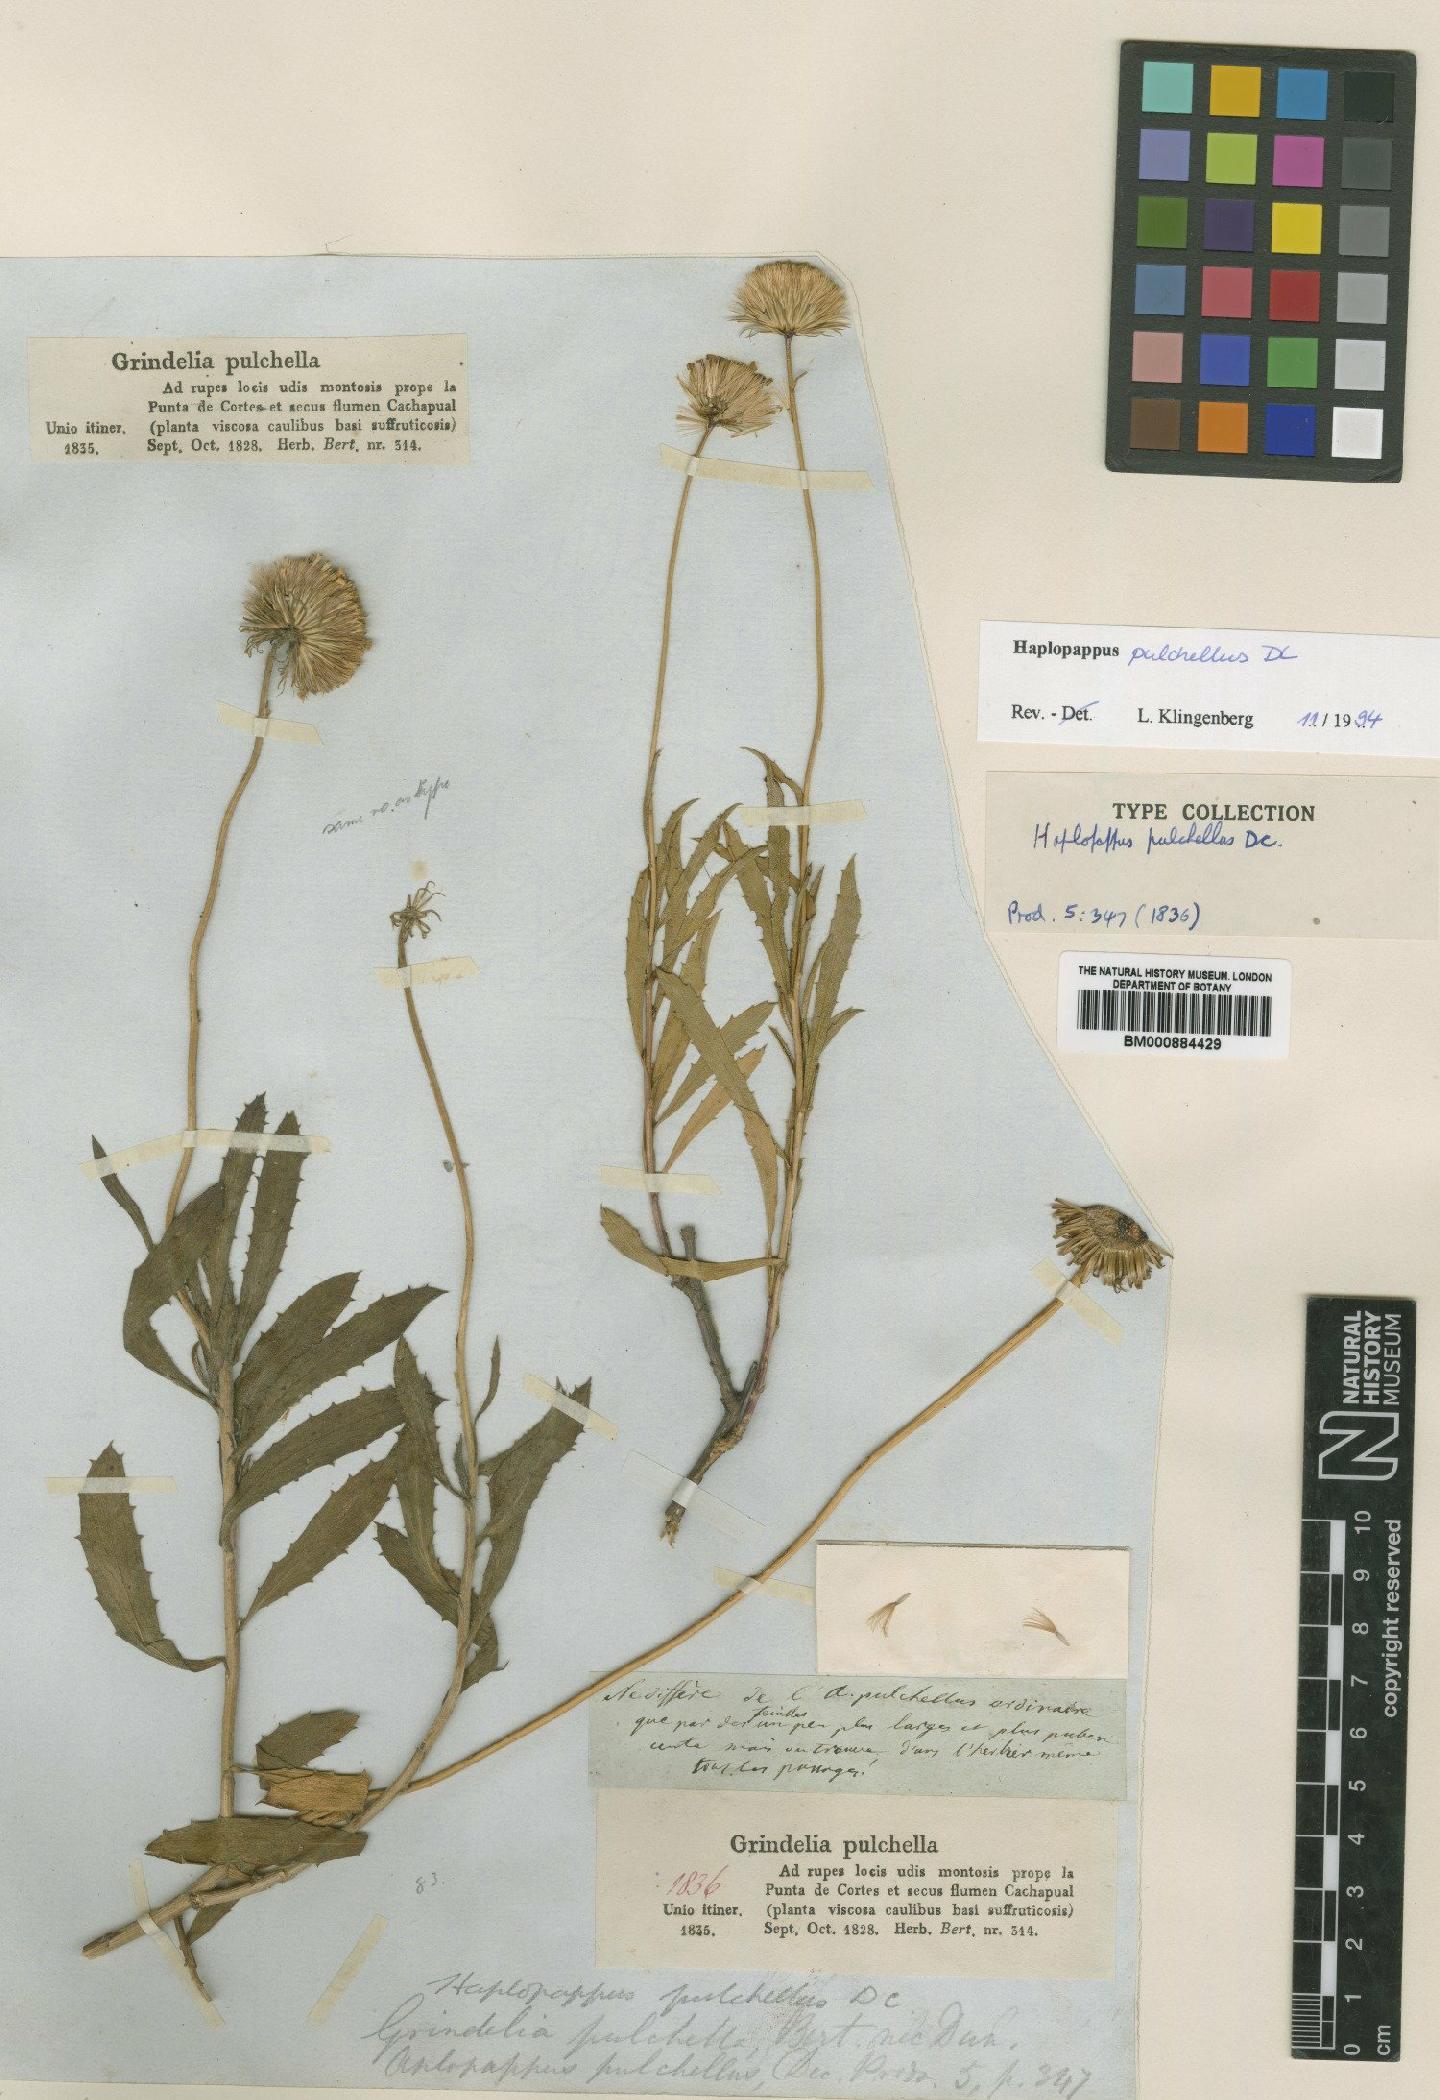 To NHMUK collection (Haplopappus pulchellus DC.; Isotype; NHMUK:ecatalogue:4994181)